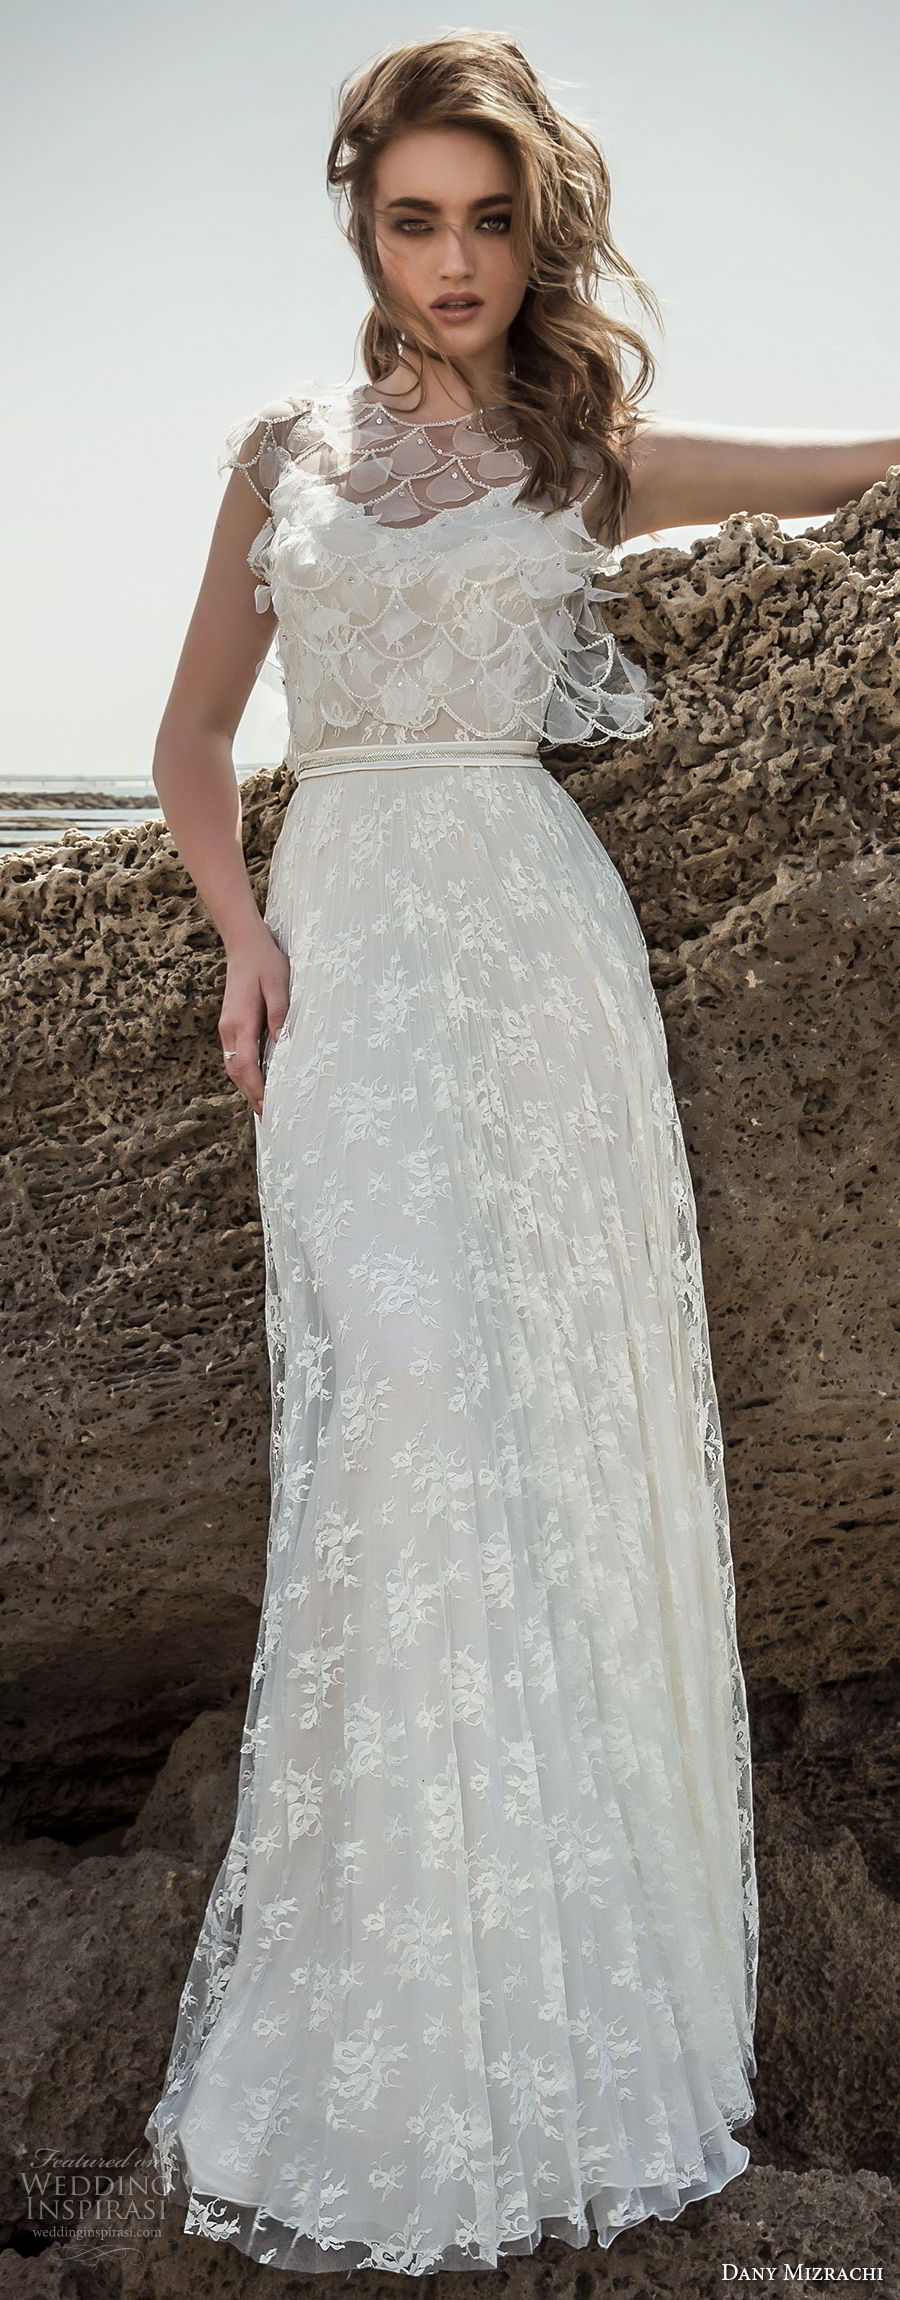 dany mizrachi 2018 bridal cap sleeves illusion jewel v neck full embellishment elegant column wedding dress (19) mv